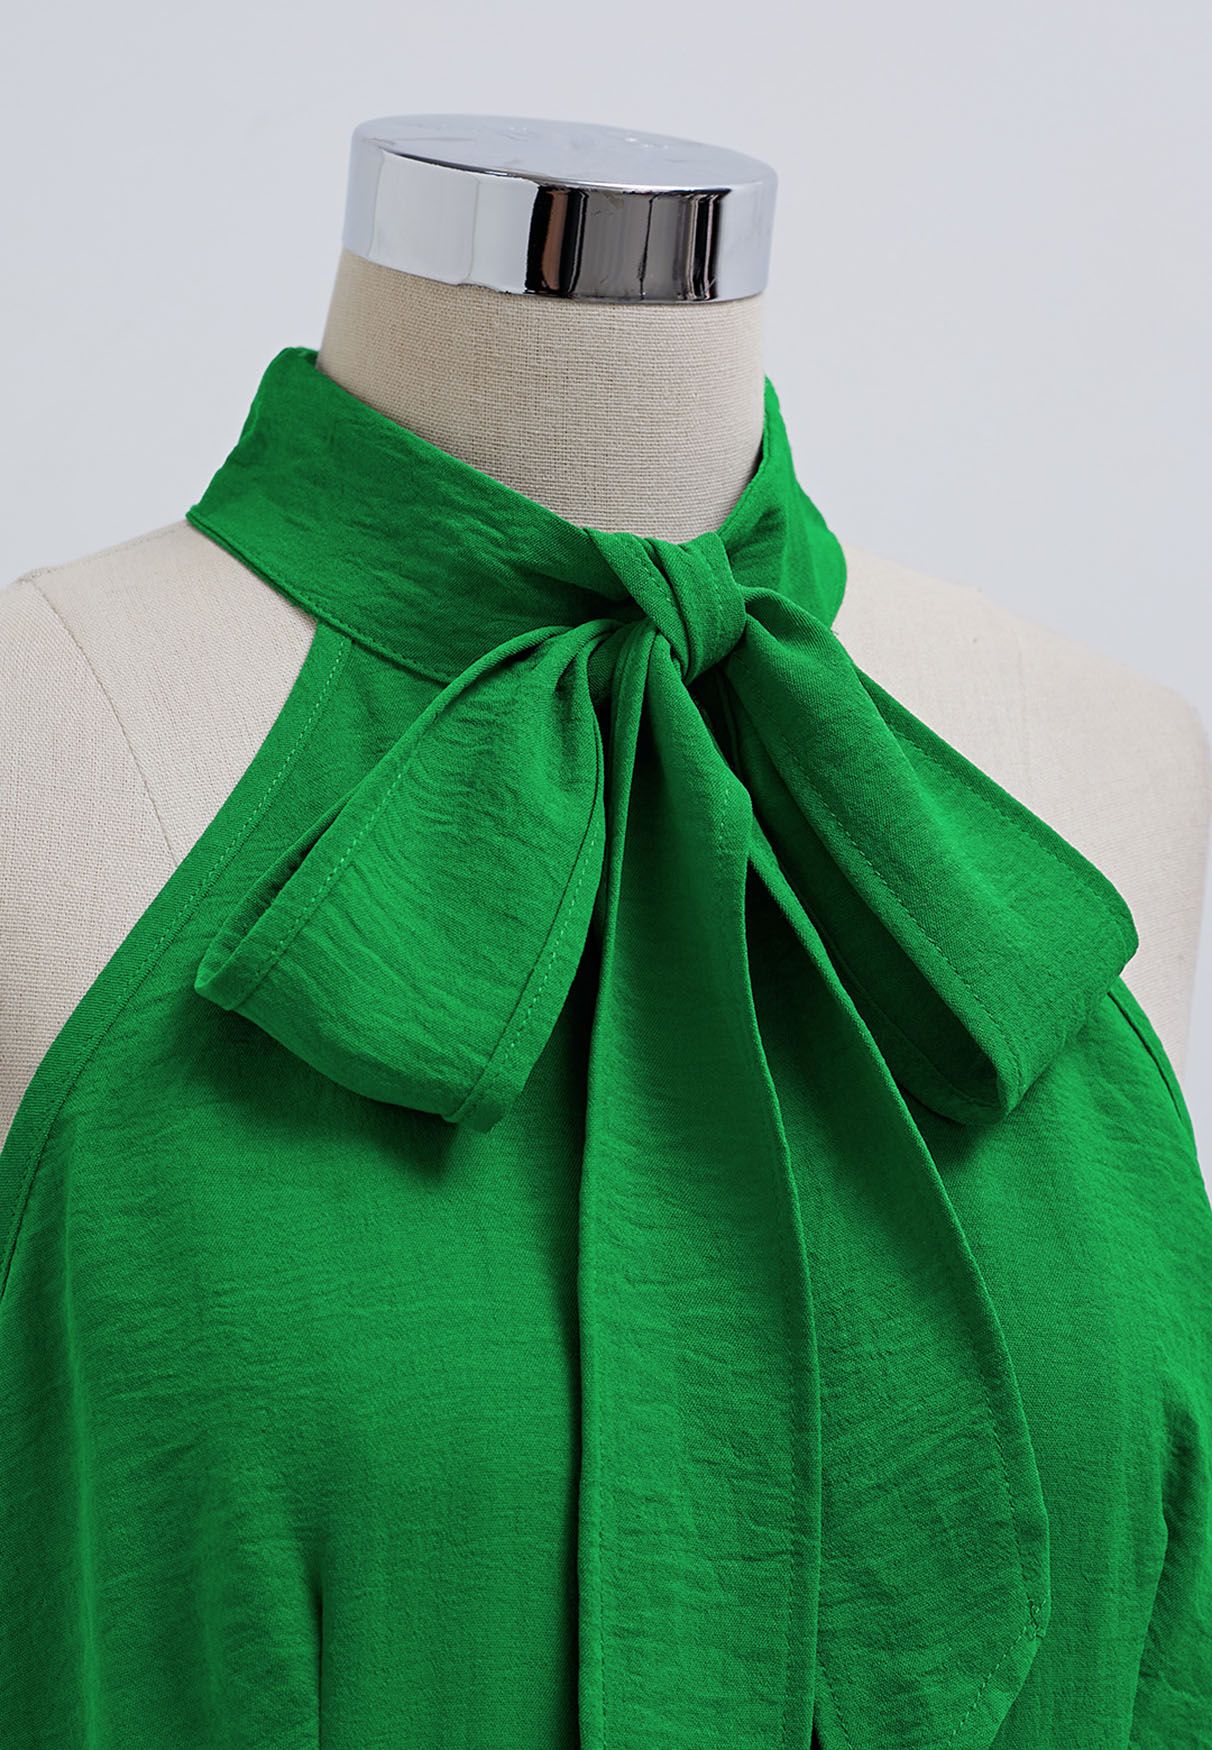 Sleek Bowknot Halter Neck Jumpsuit in Green